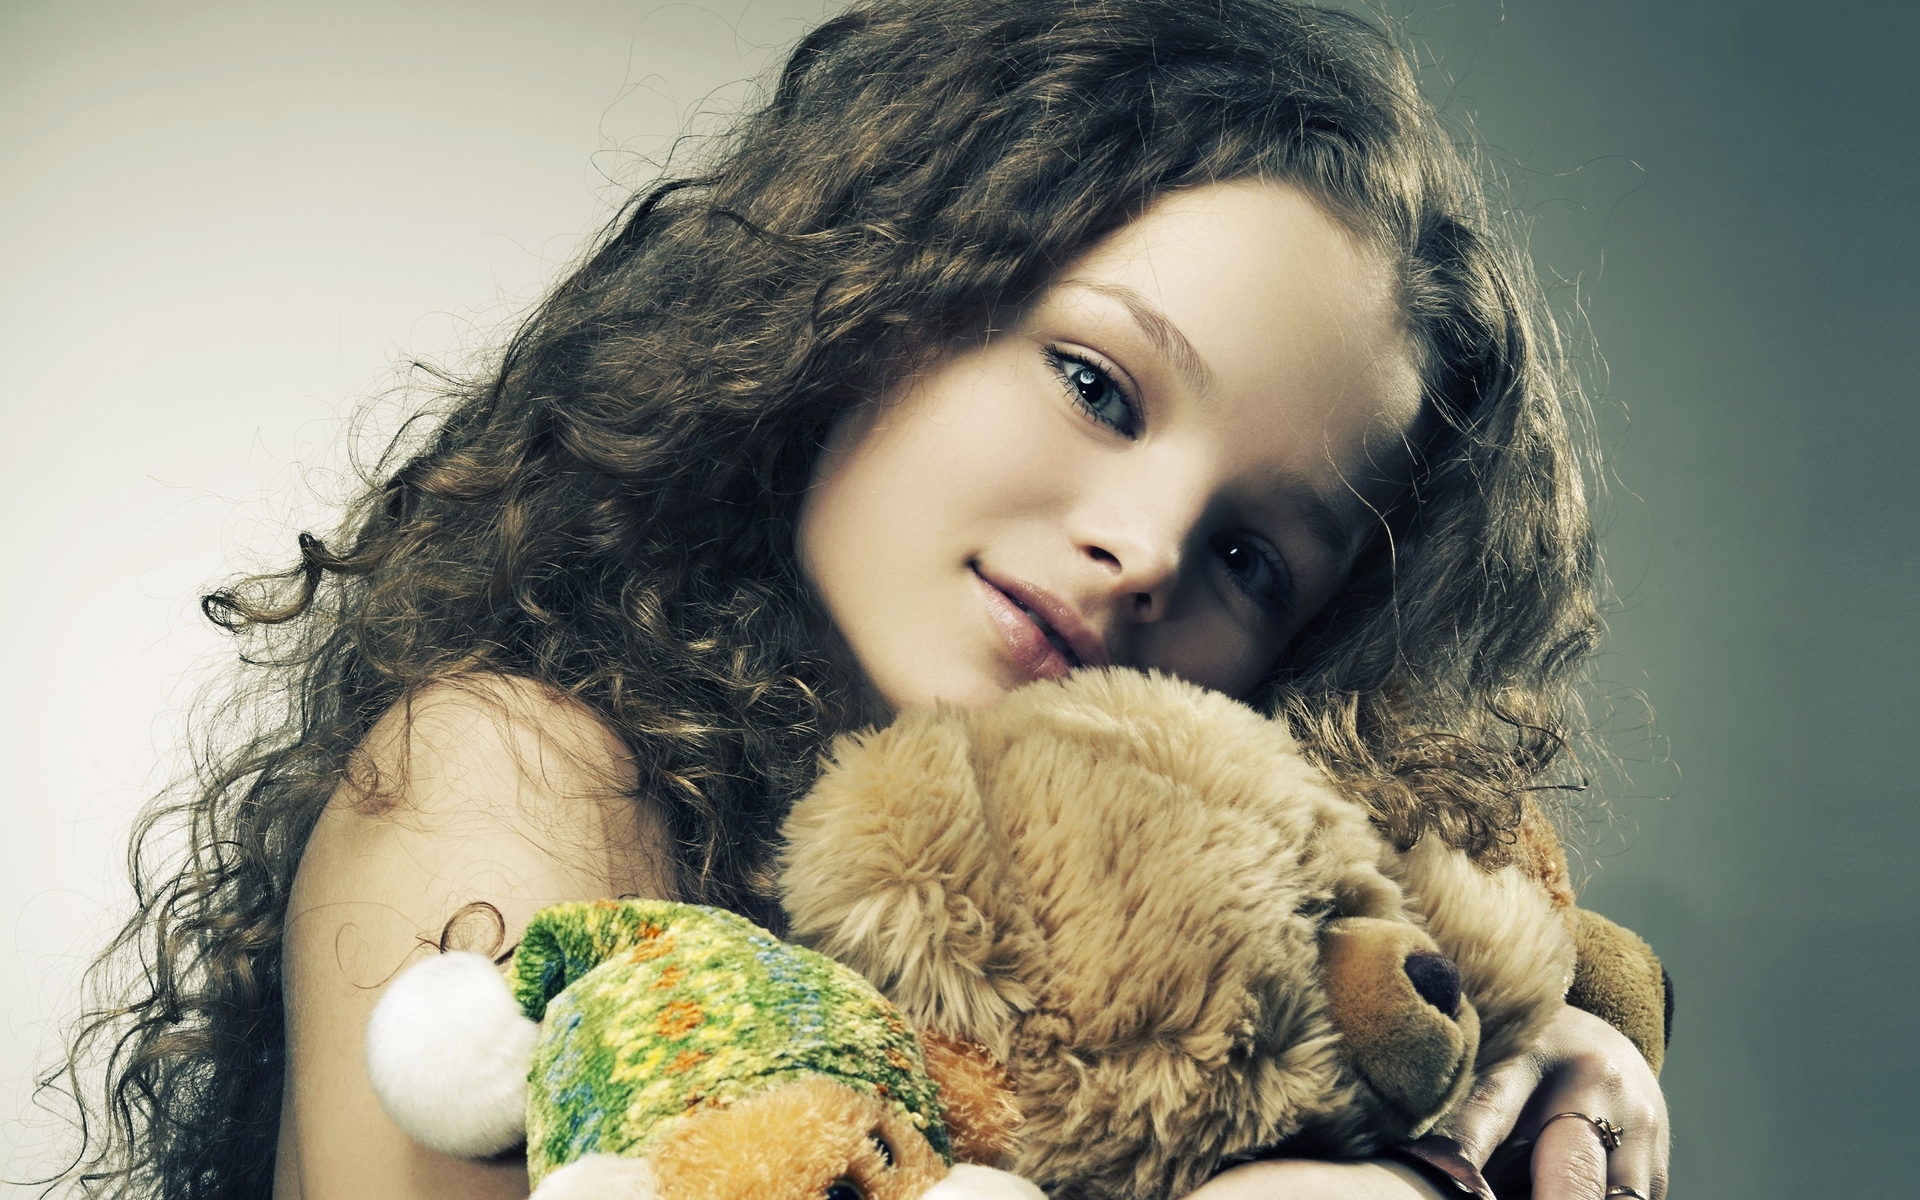 Картинка: Девочка, игрушки, взгляд, улыбка, волосы, кудри, мишка